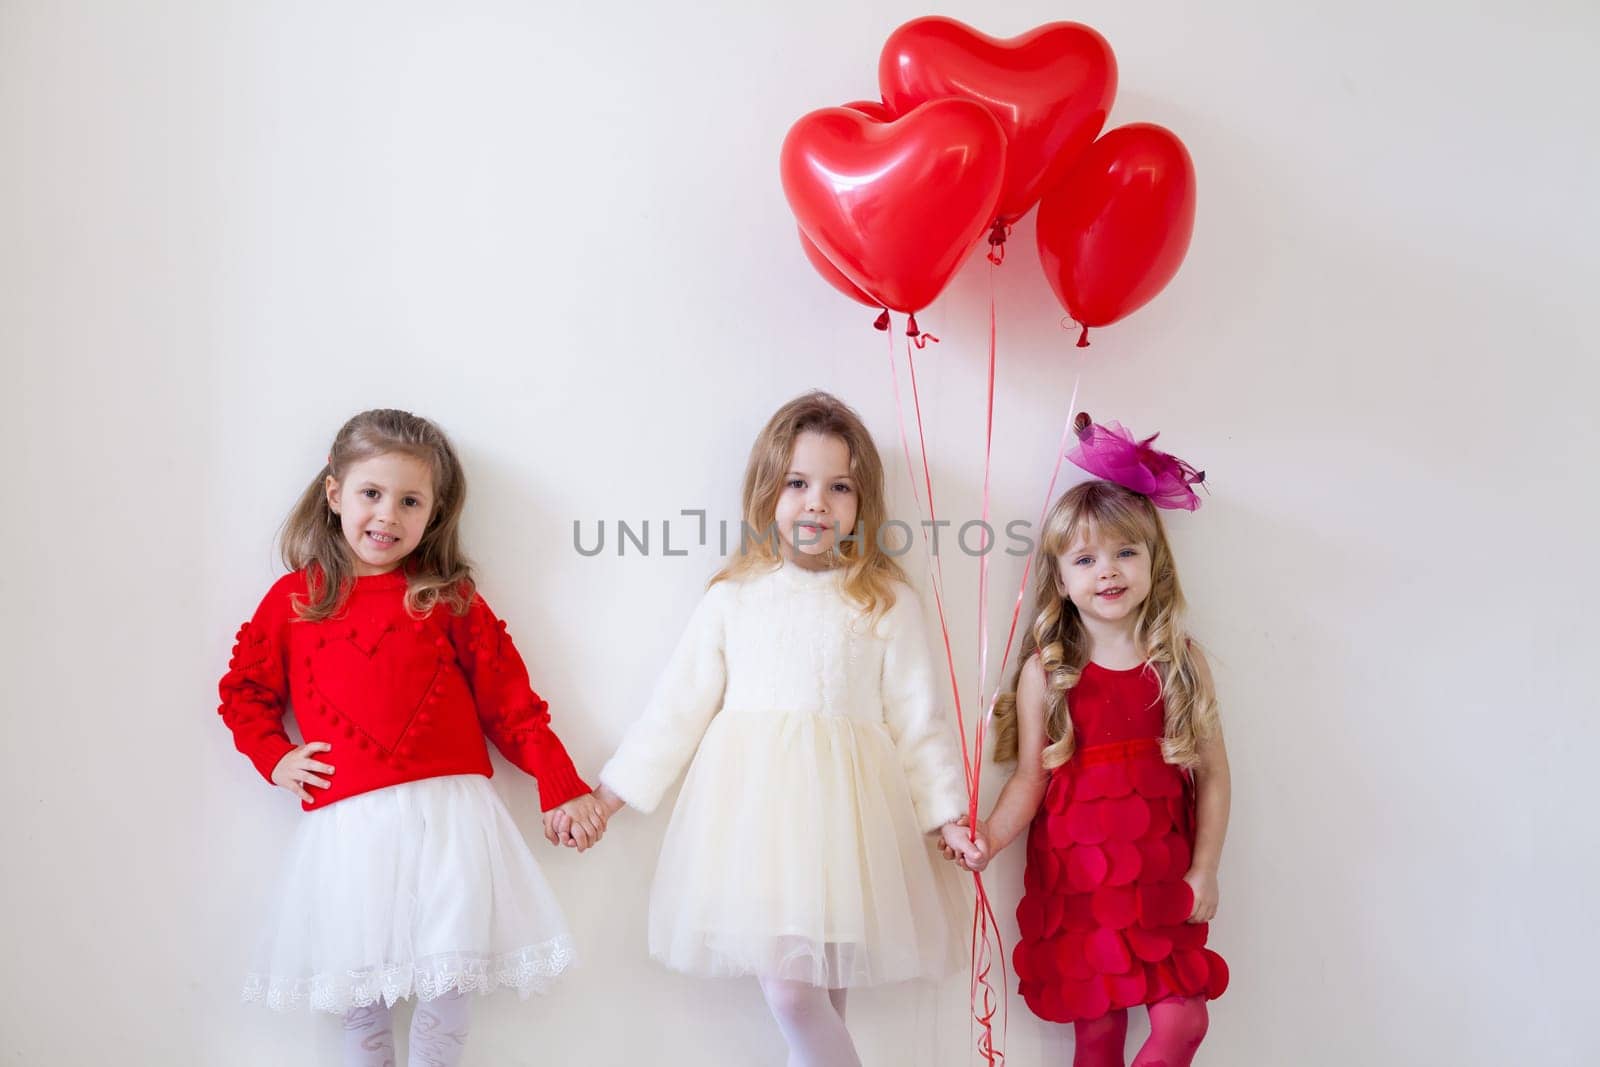 elegant girls with red balls valentine's day holiday by Simakov